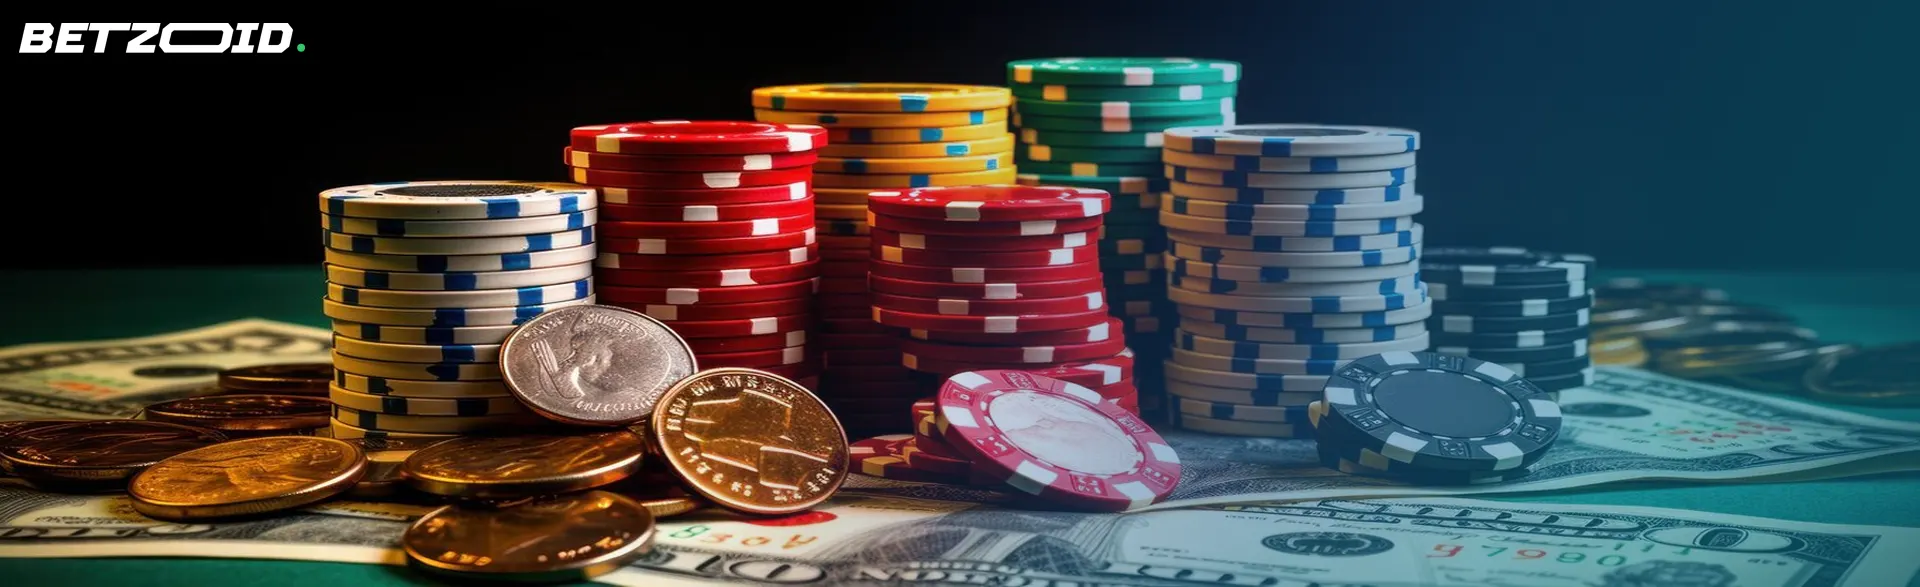 Casino with $5 deposit bonus and real money winning.